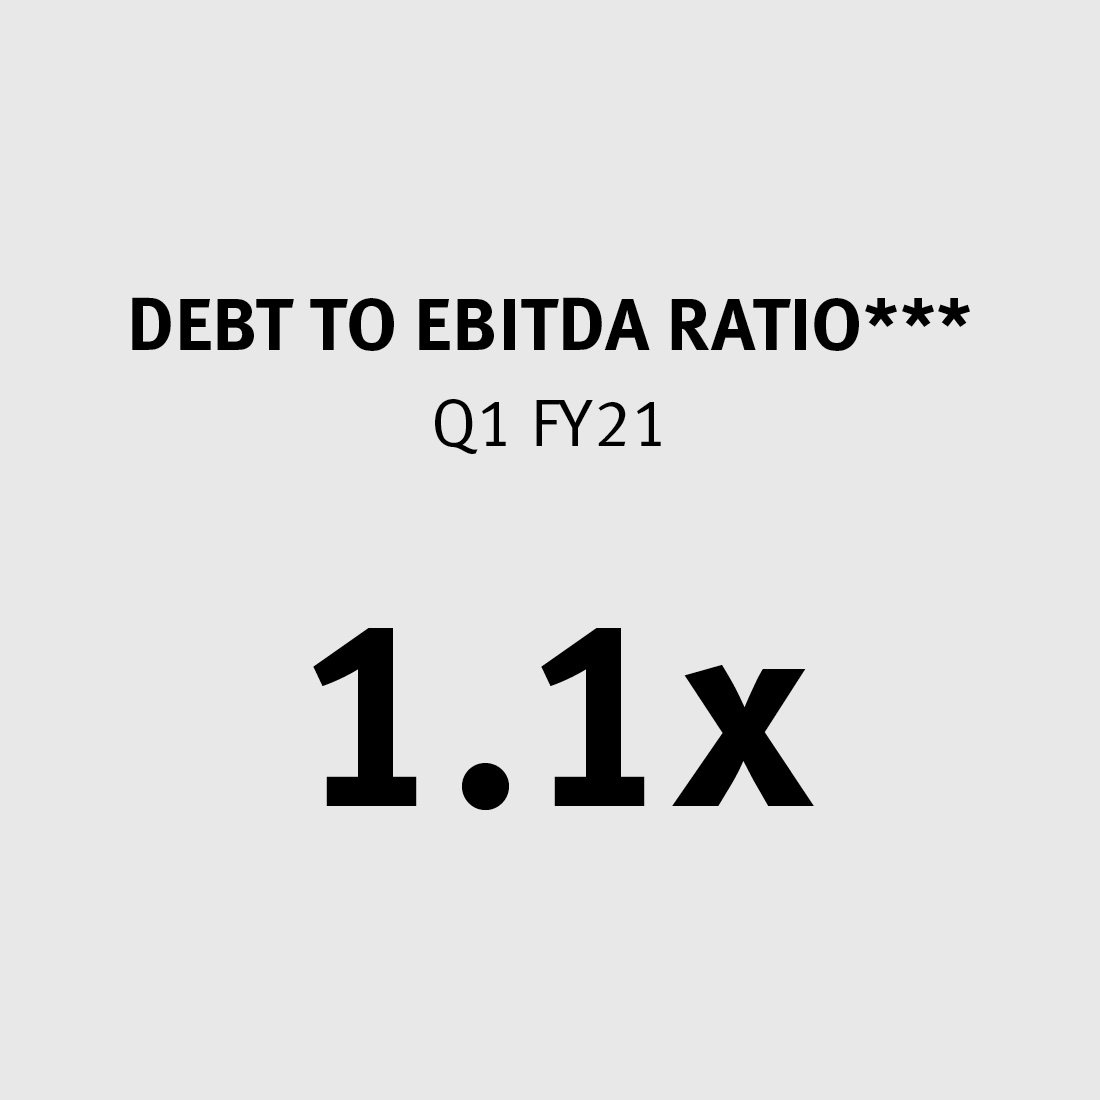 Debt to EBITDA Ratio 1.1x